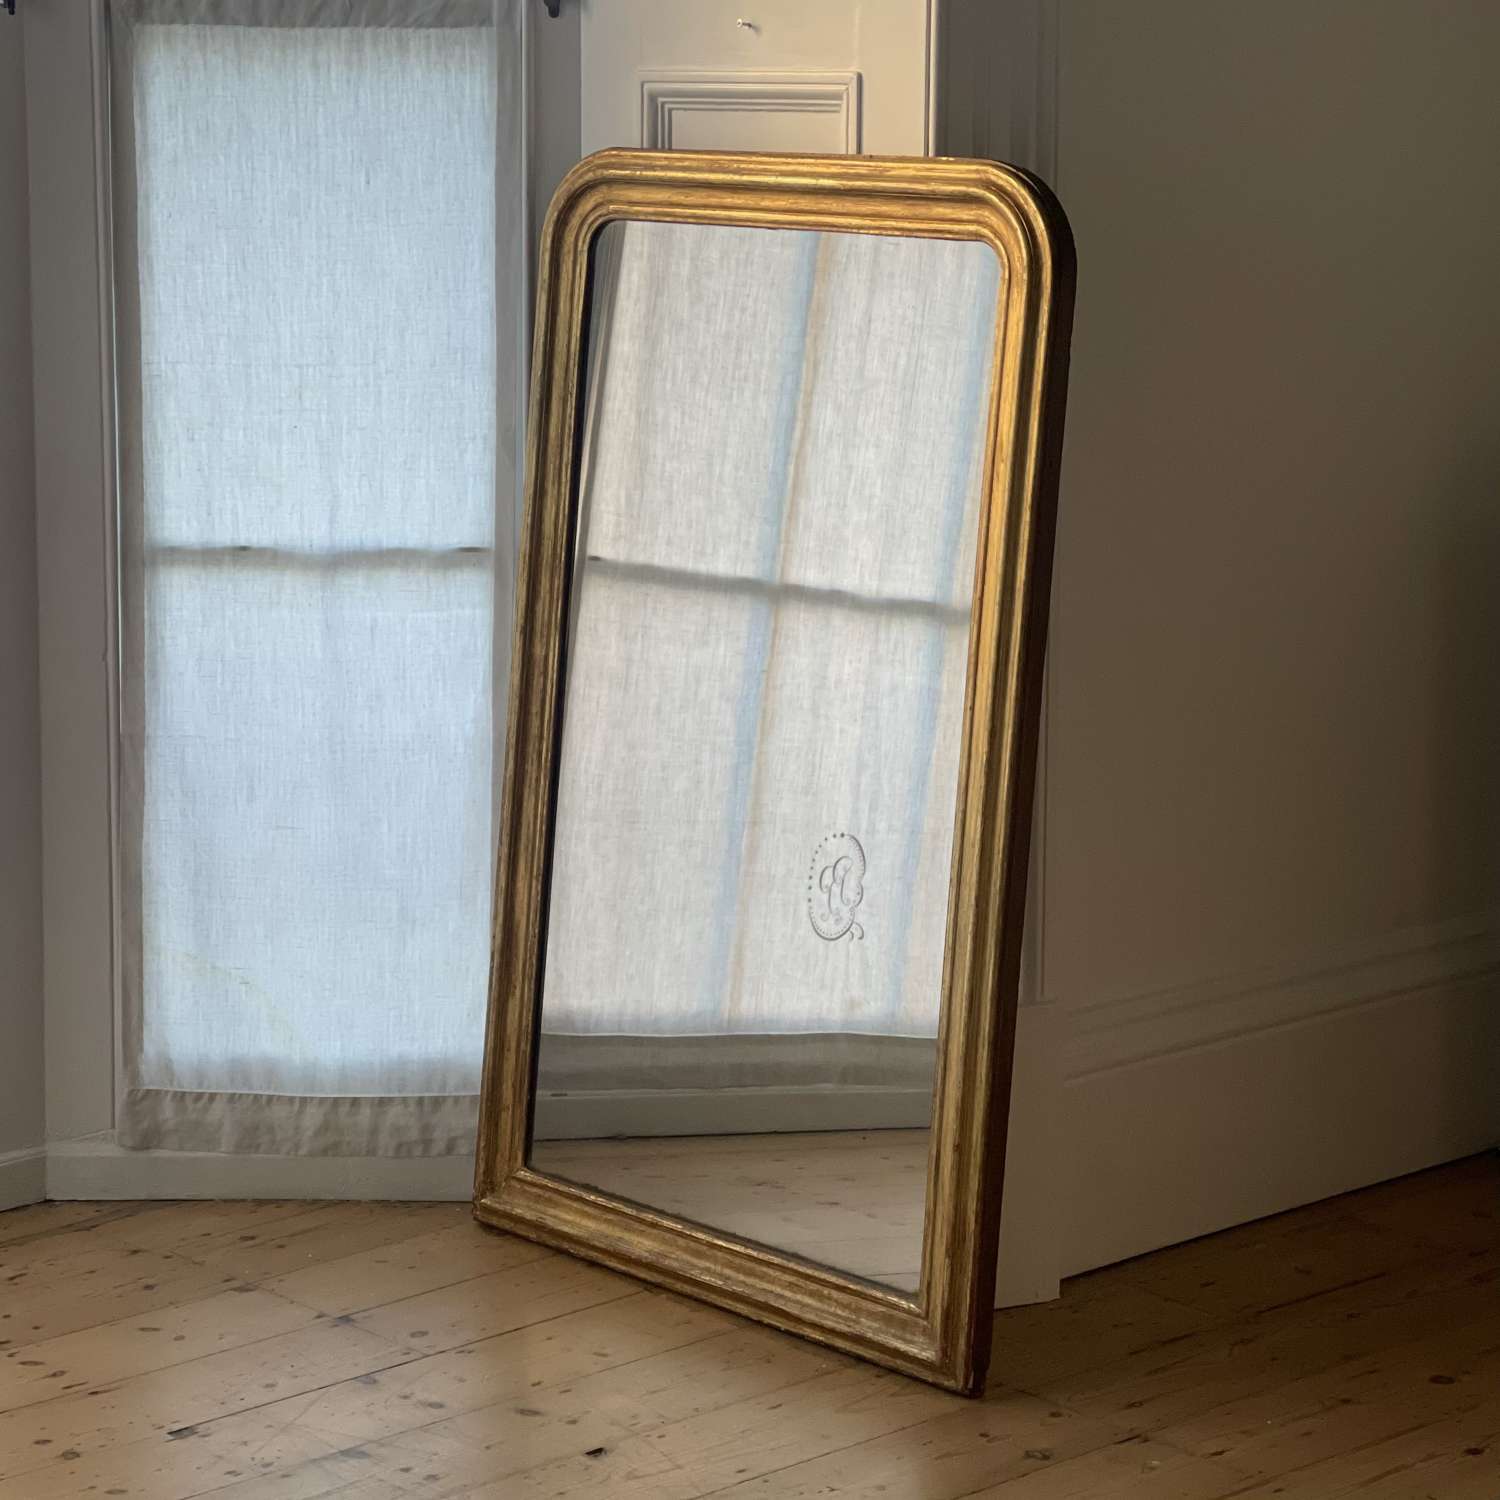 19th century French gilt mirror c1820 - mercury glass